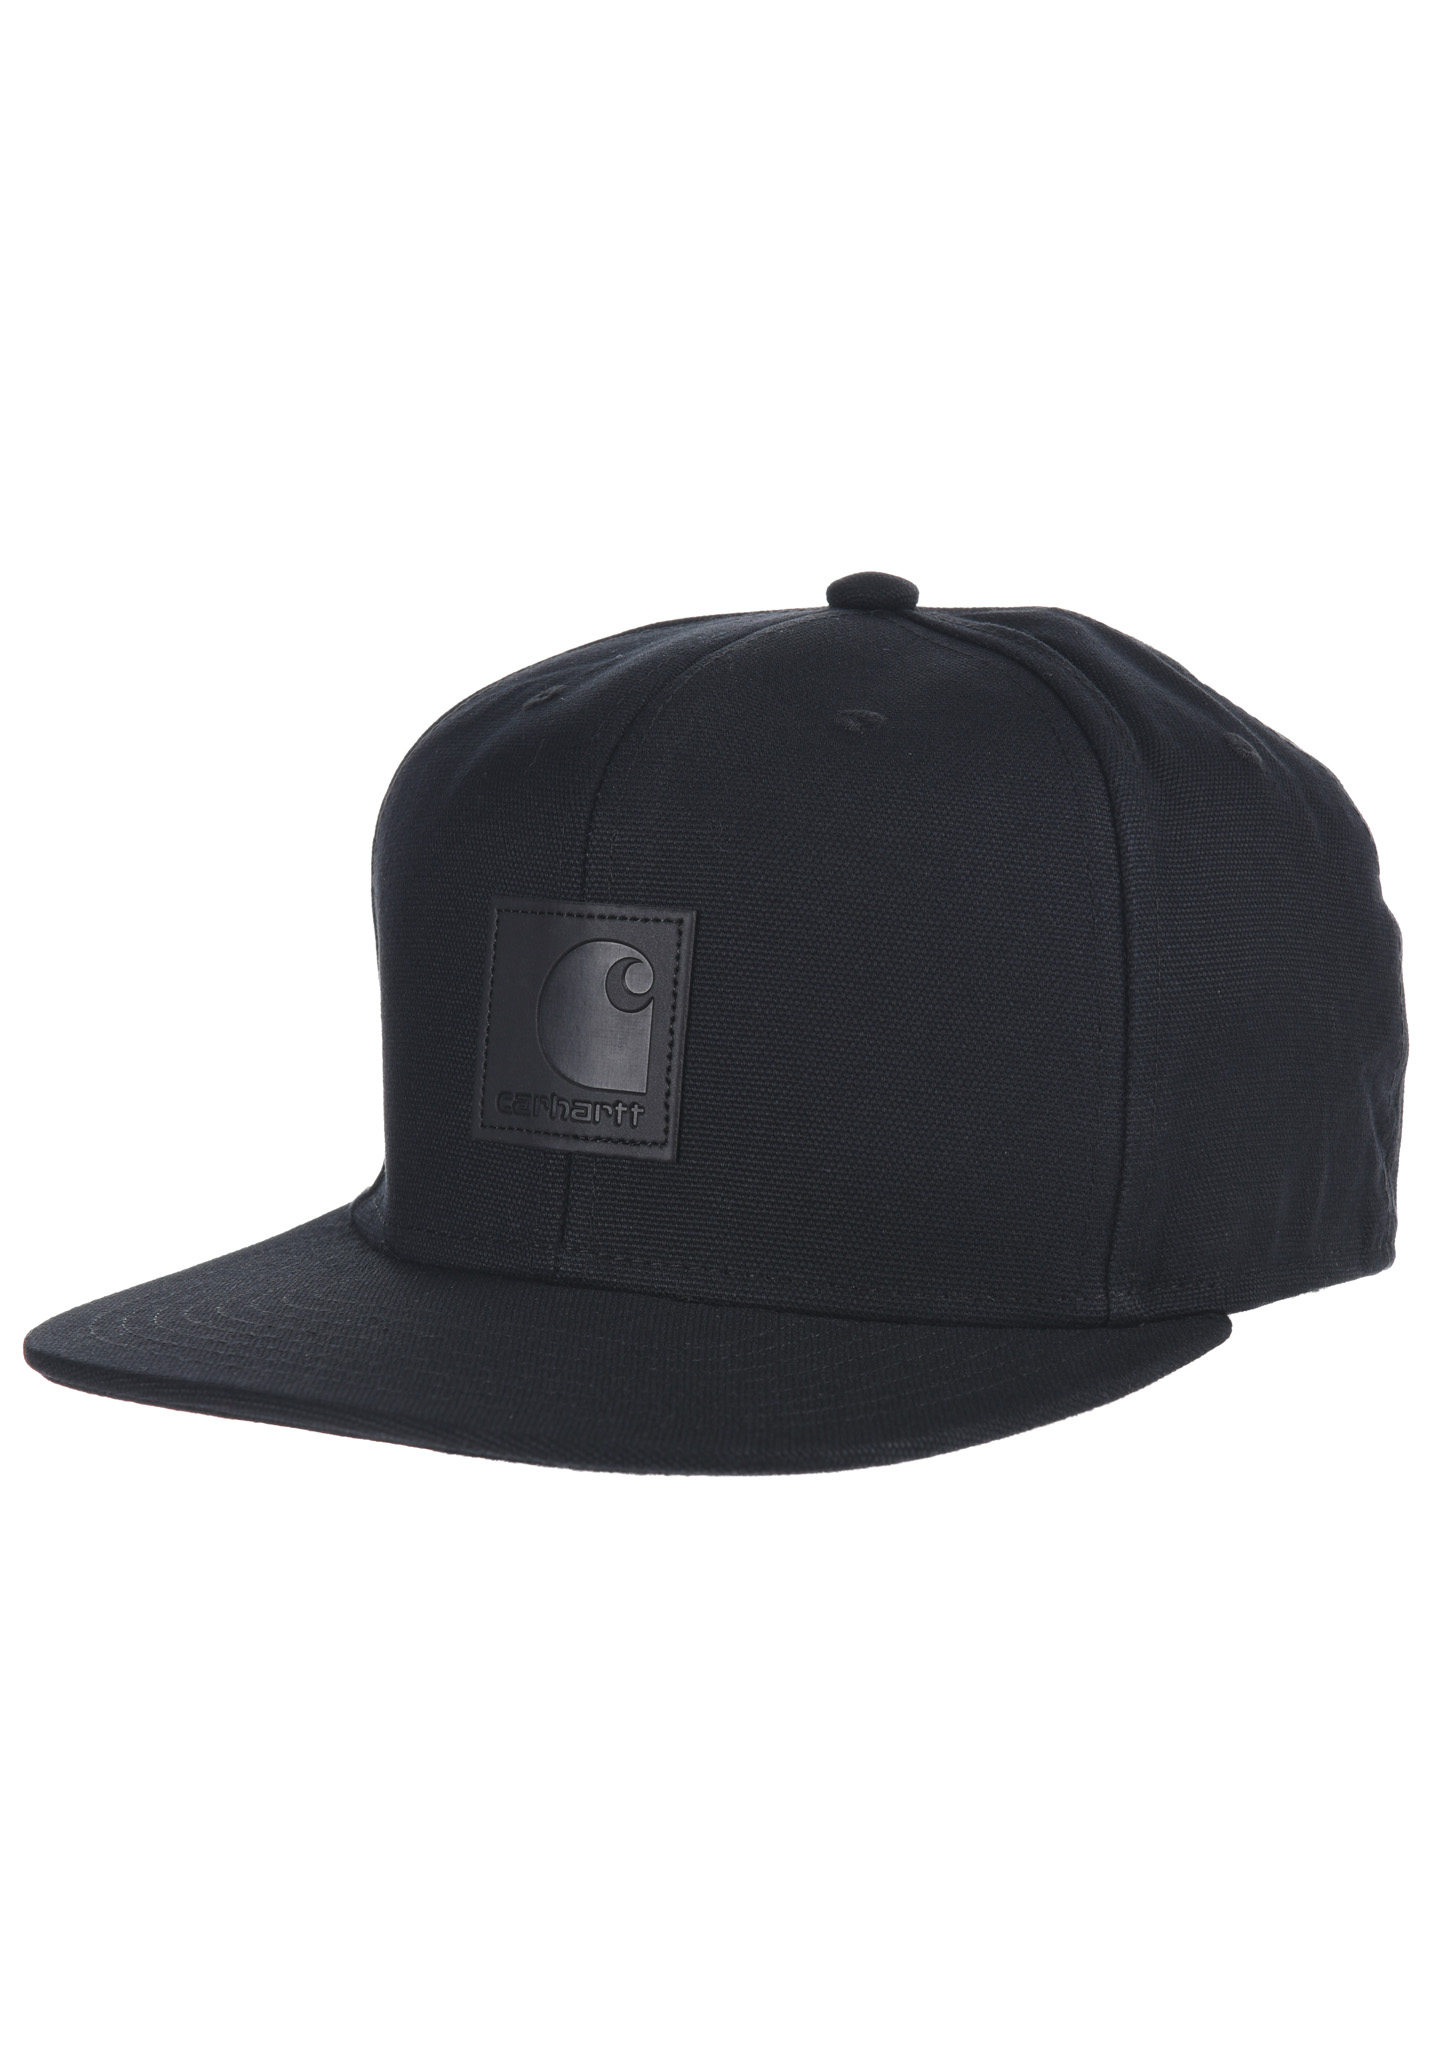 Carhartt WIP Logo Caps black One Size